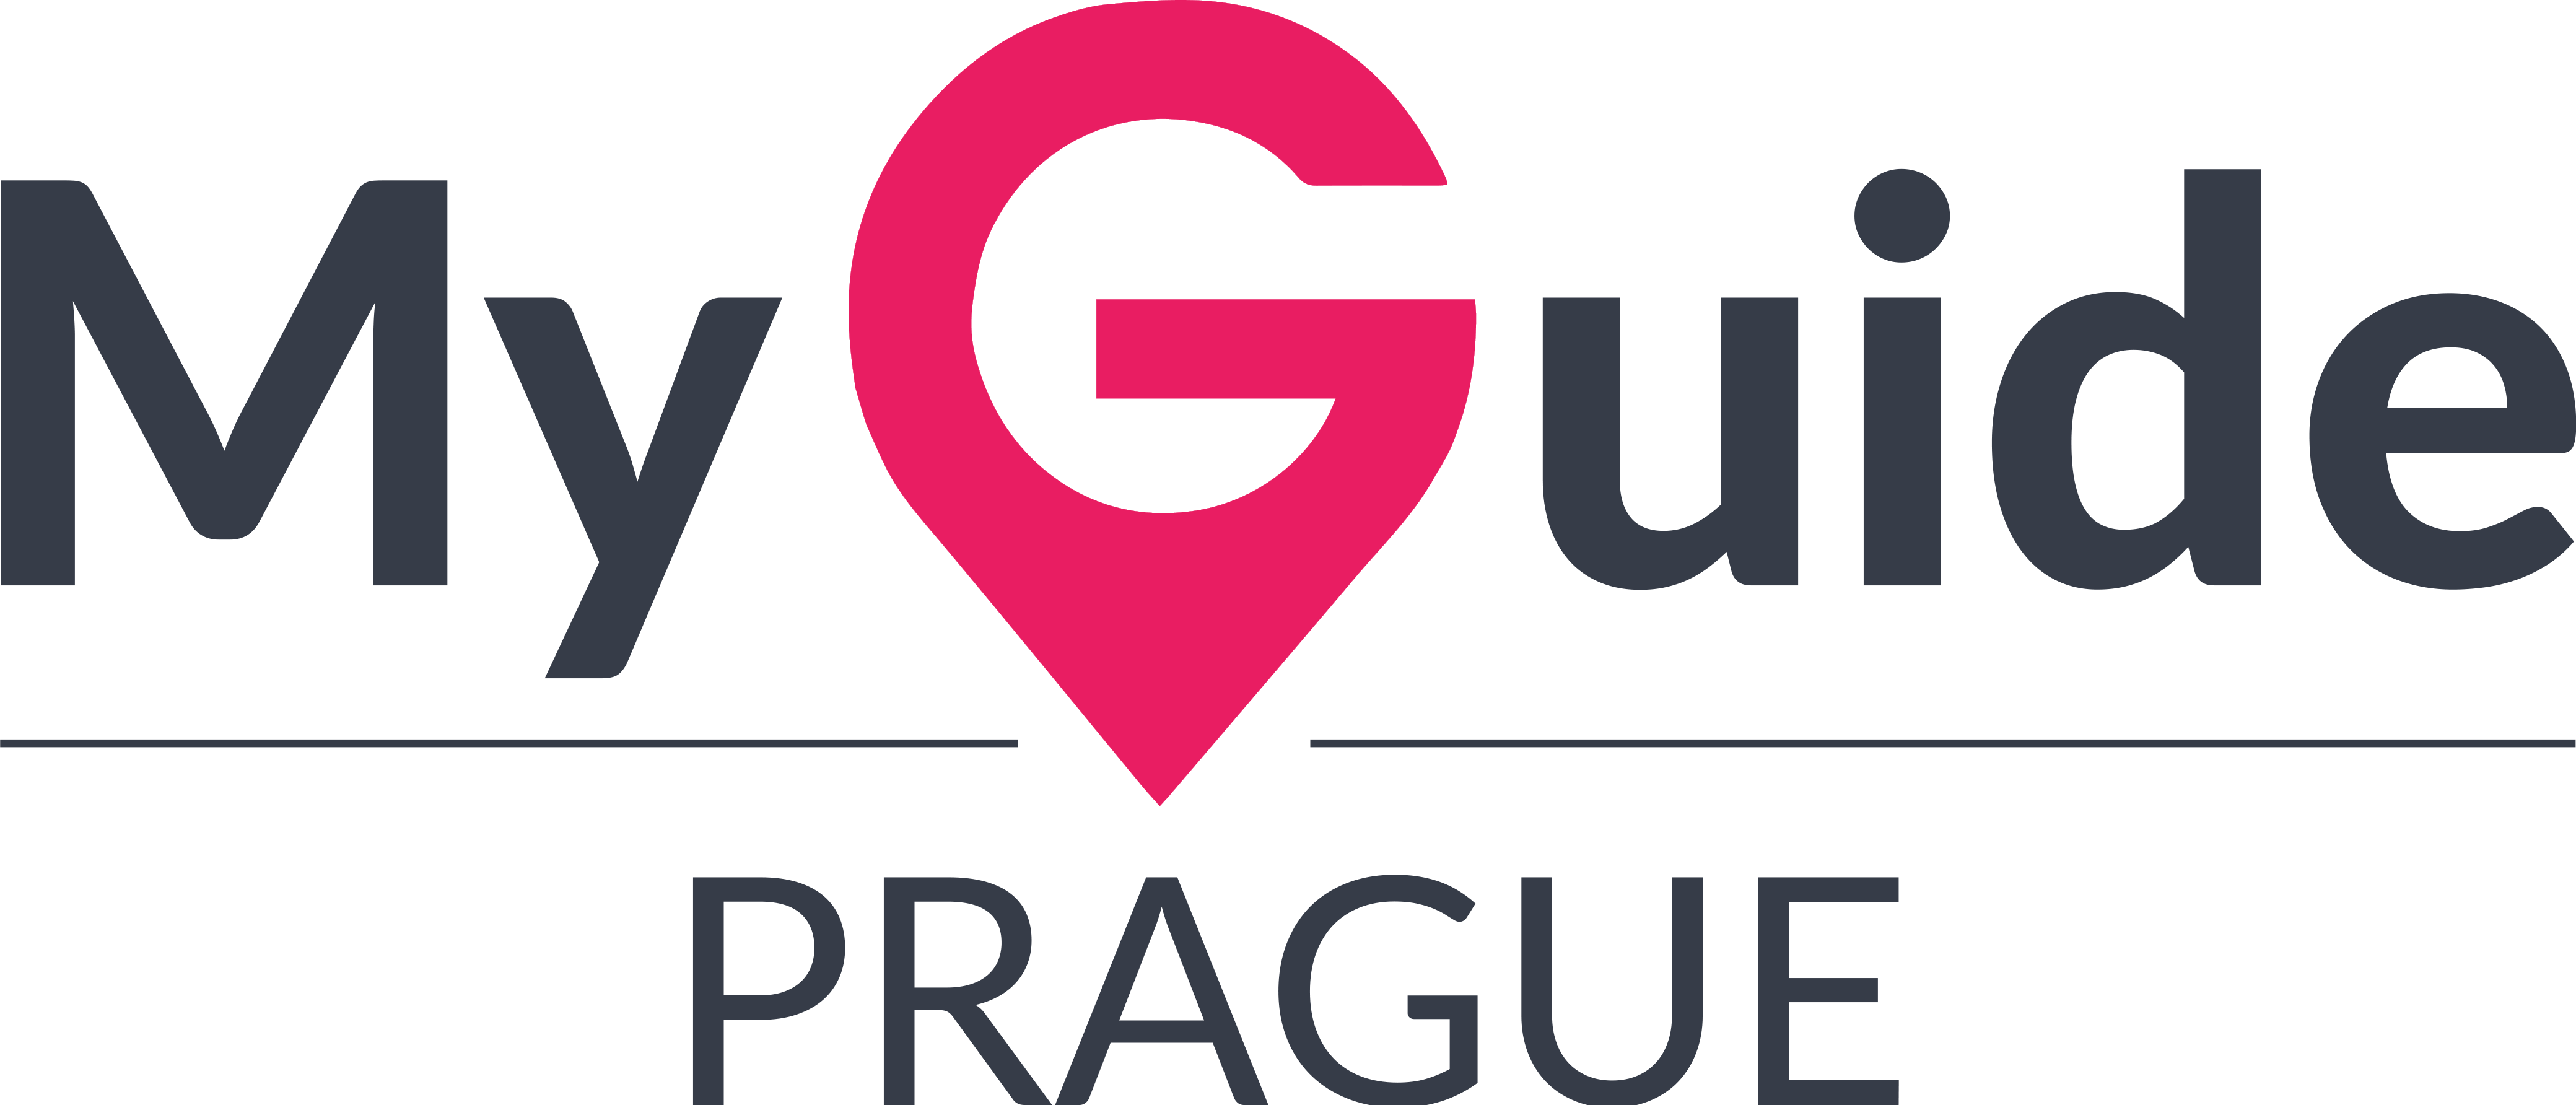 My Guide Prague